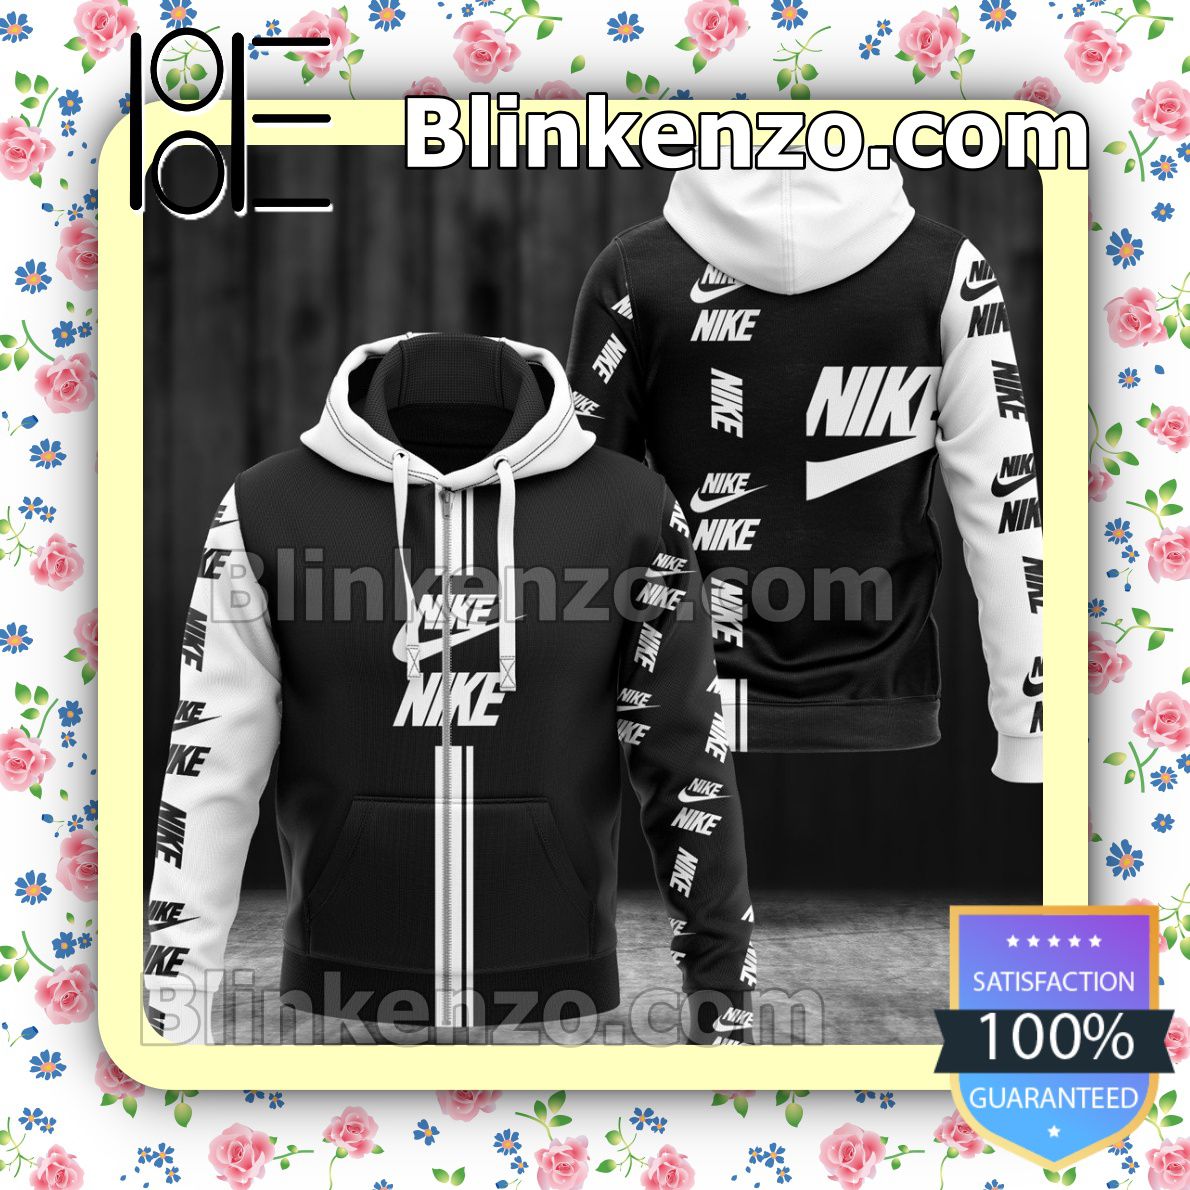 Perfect Nike Luxury Brand Name And Logo Black Mix White Full-Zip Hooded Fleece Sweatshirt